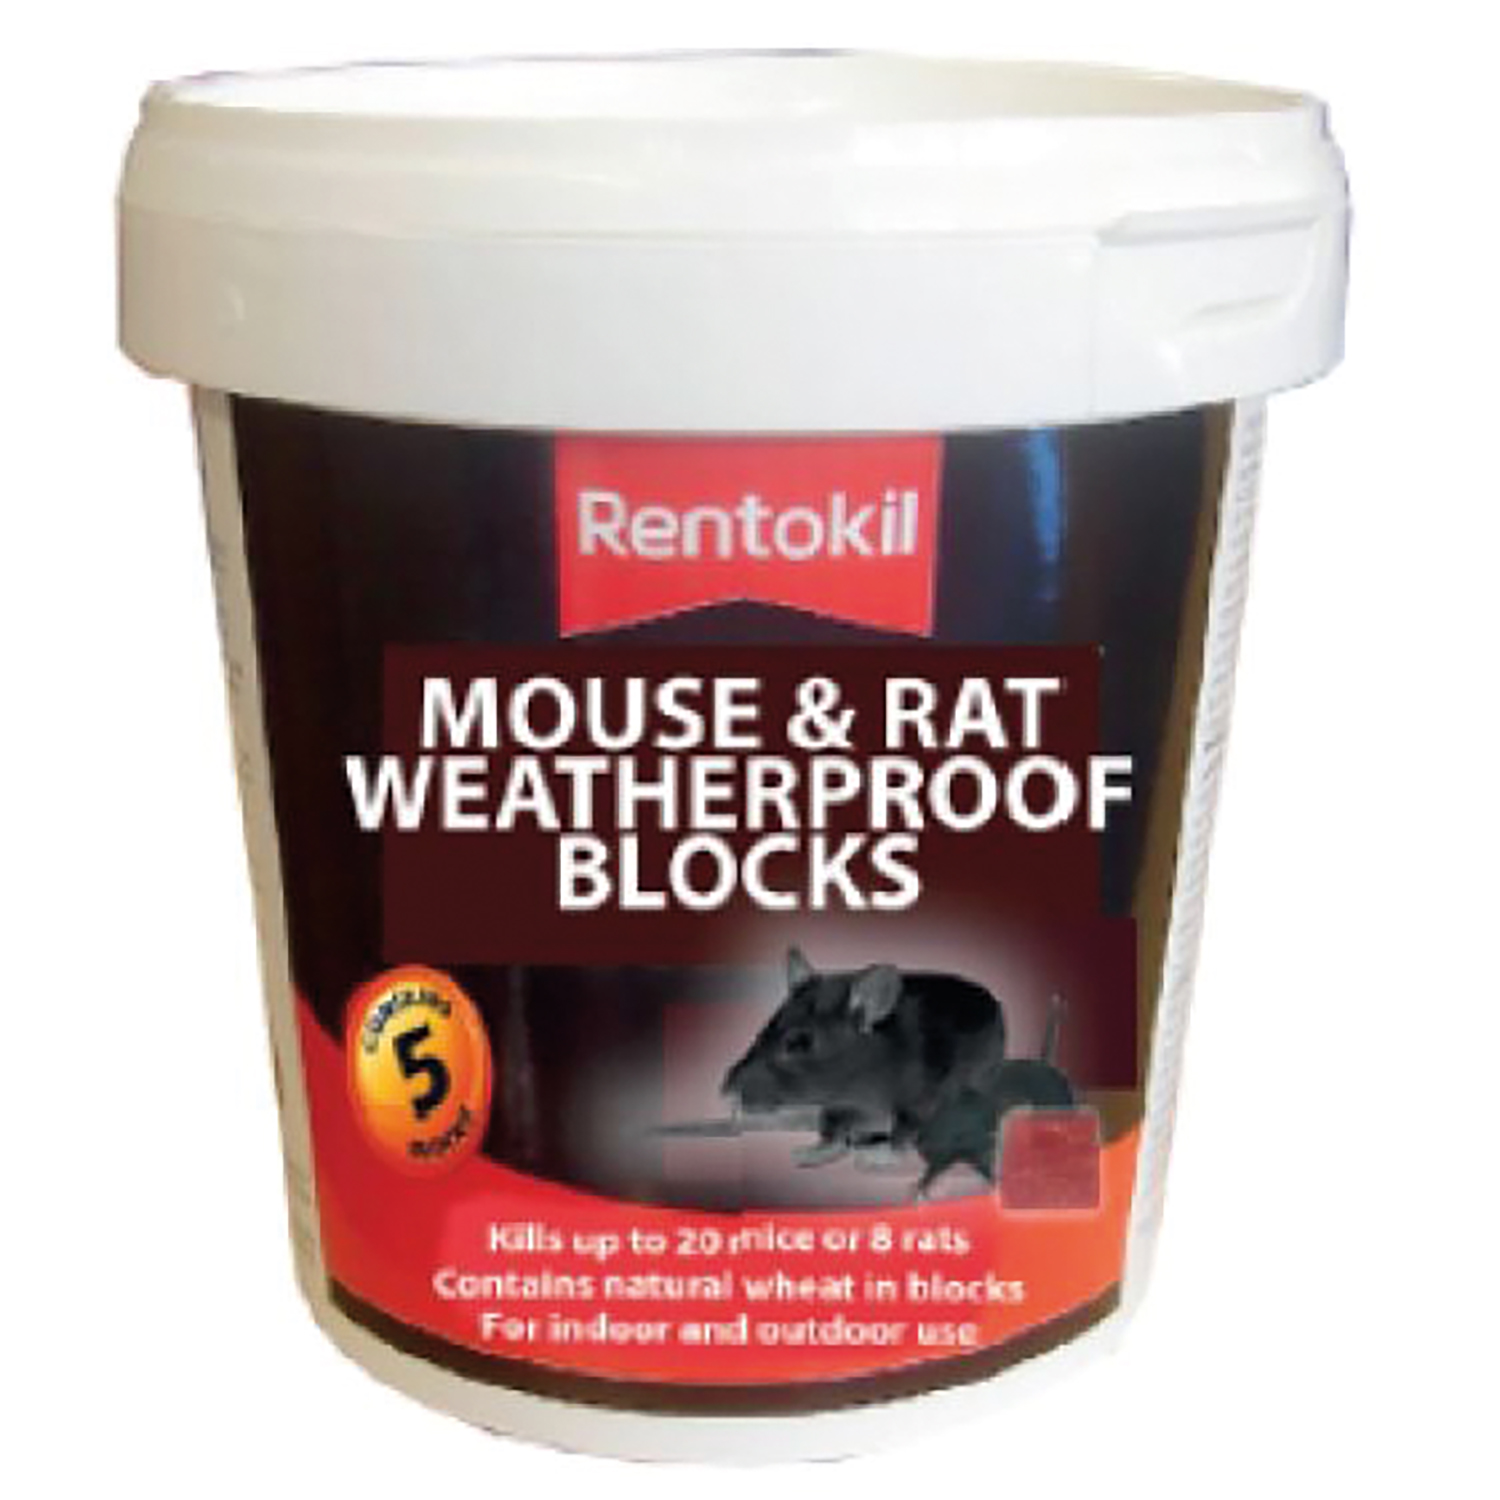 RENTOKIL MOUSE & RAT WEATHERPROOF BLOCKS 5 PACK